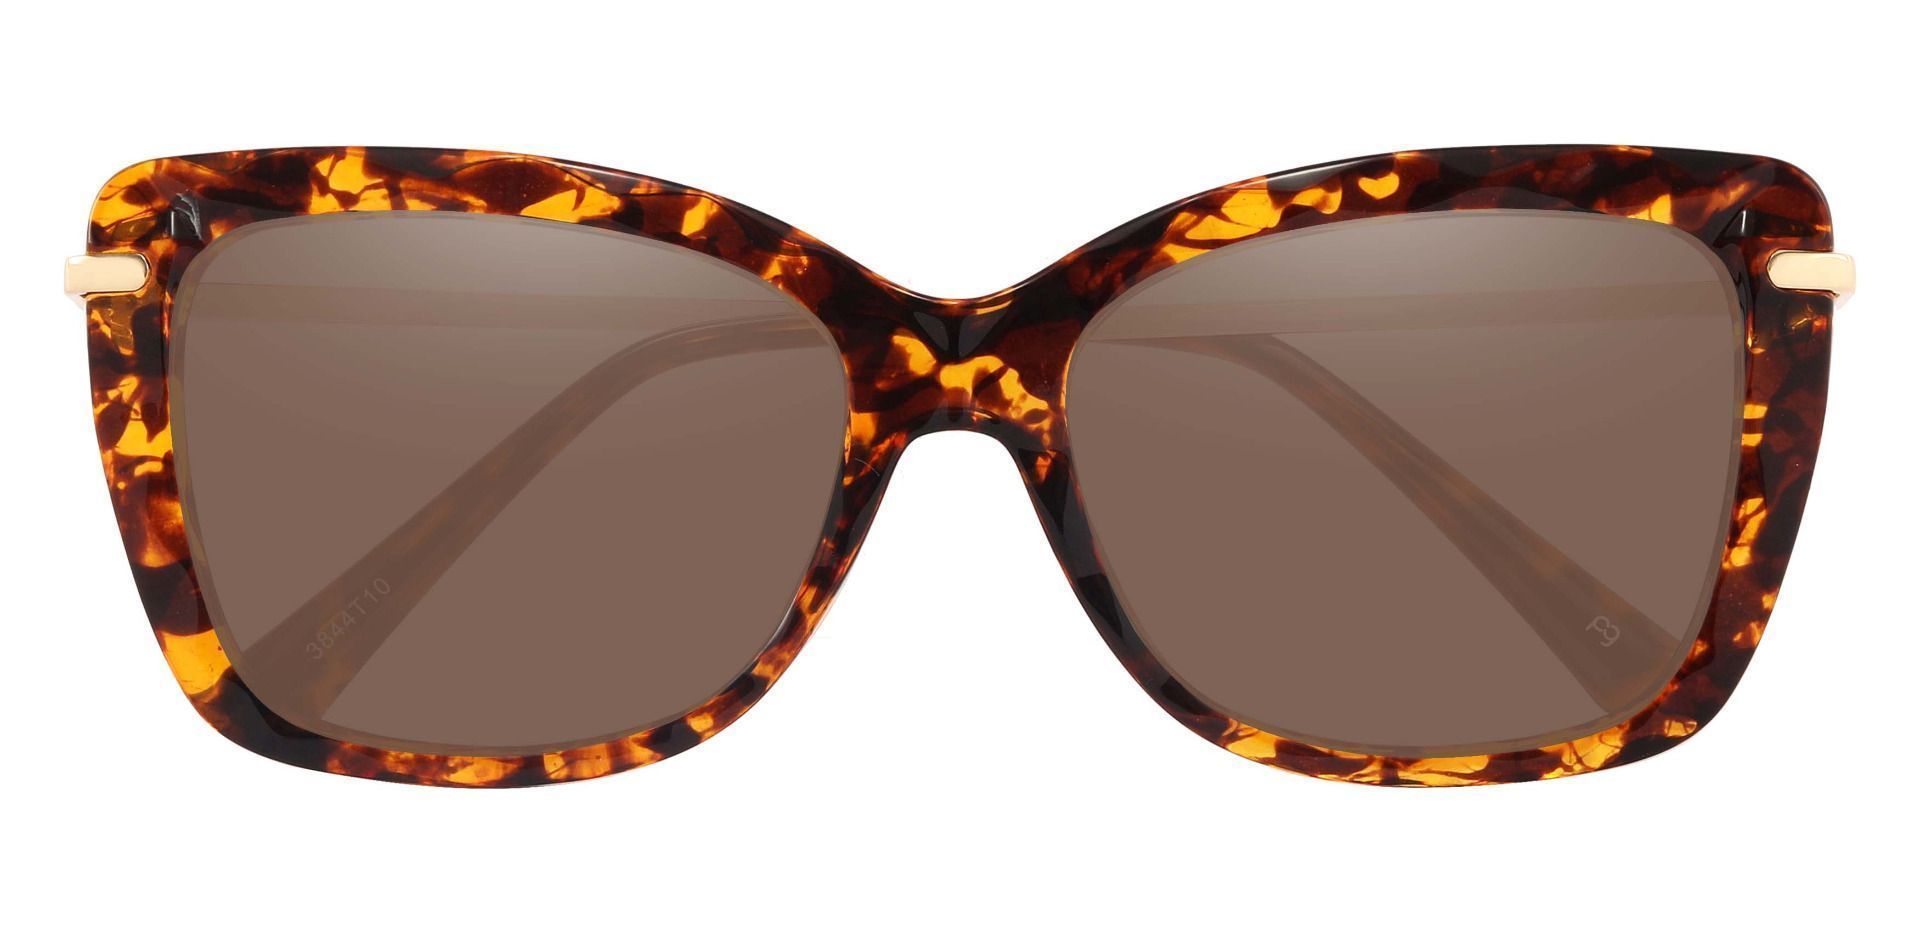 Shoshanna Rectangle Prescription Sunglasses - Tortoise Frame With Brown Lenses